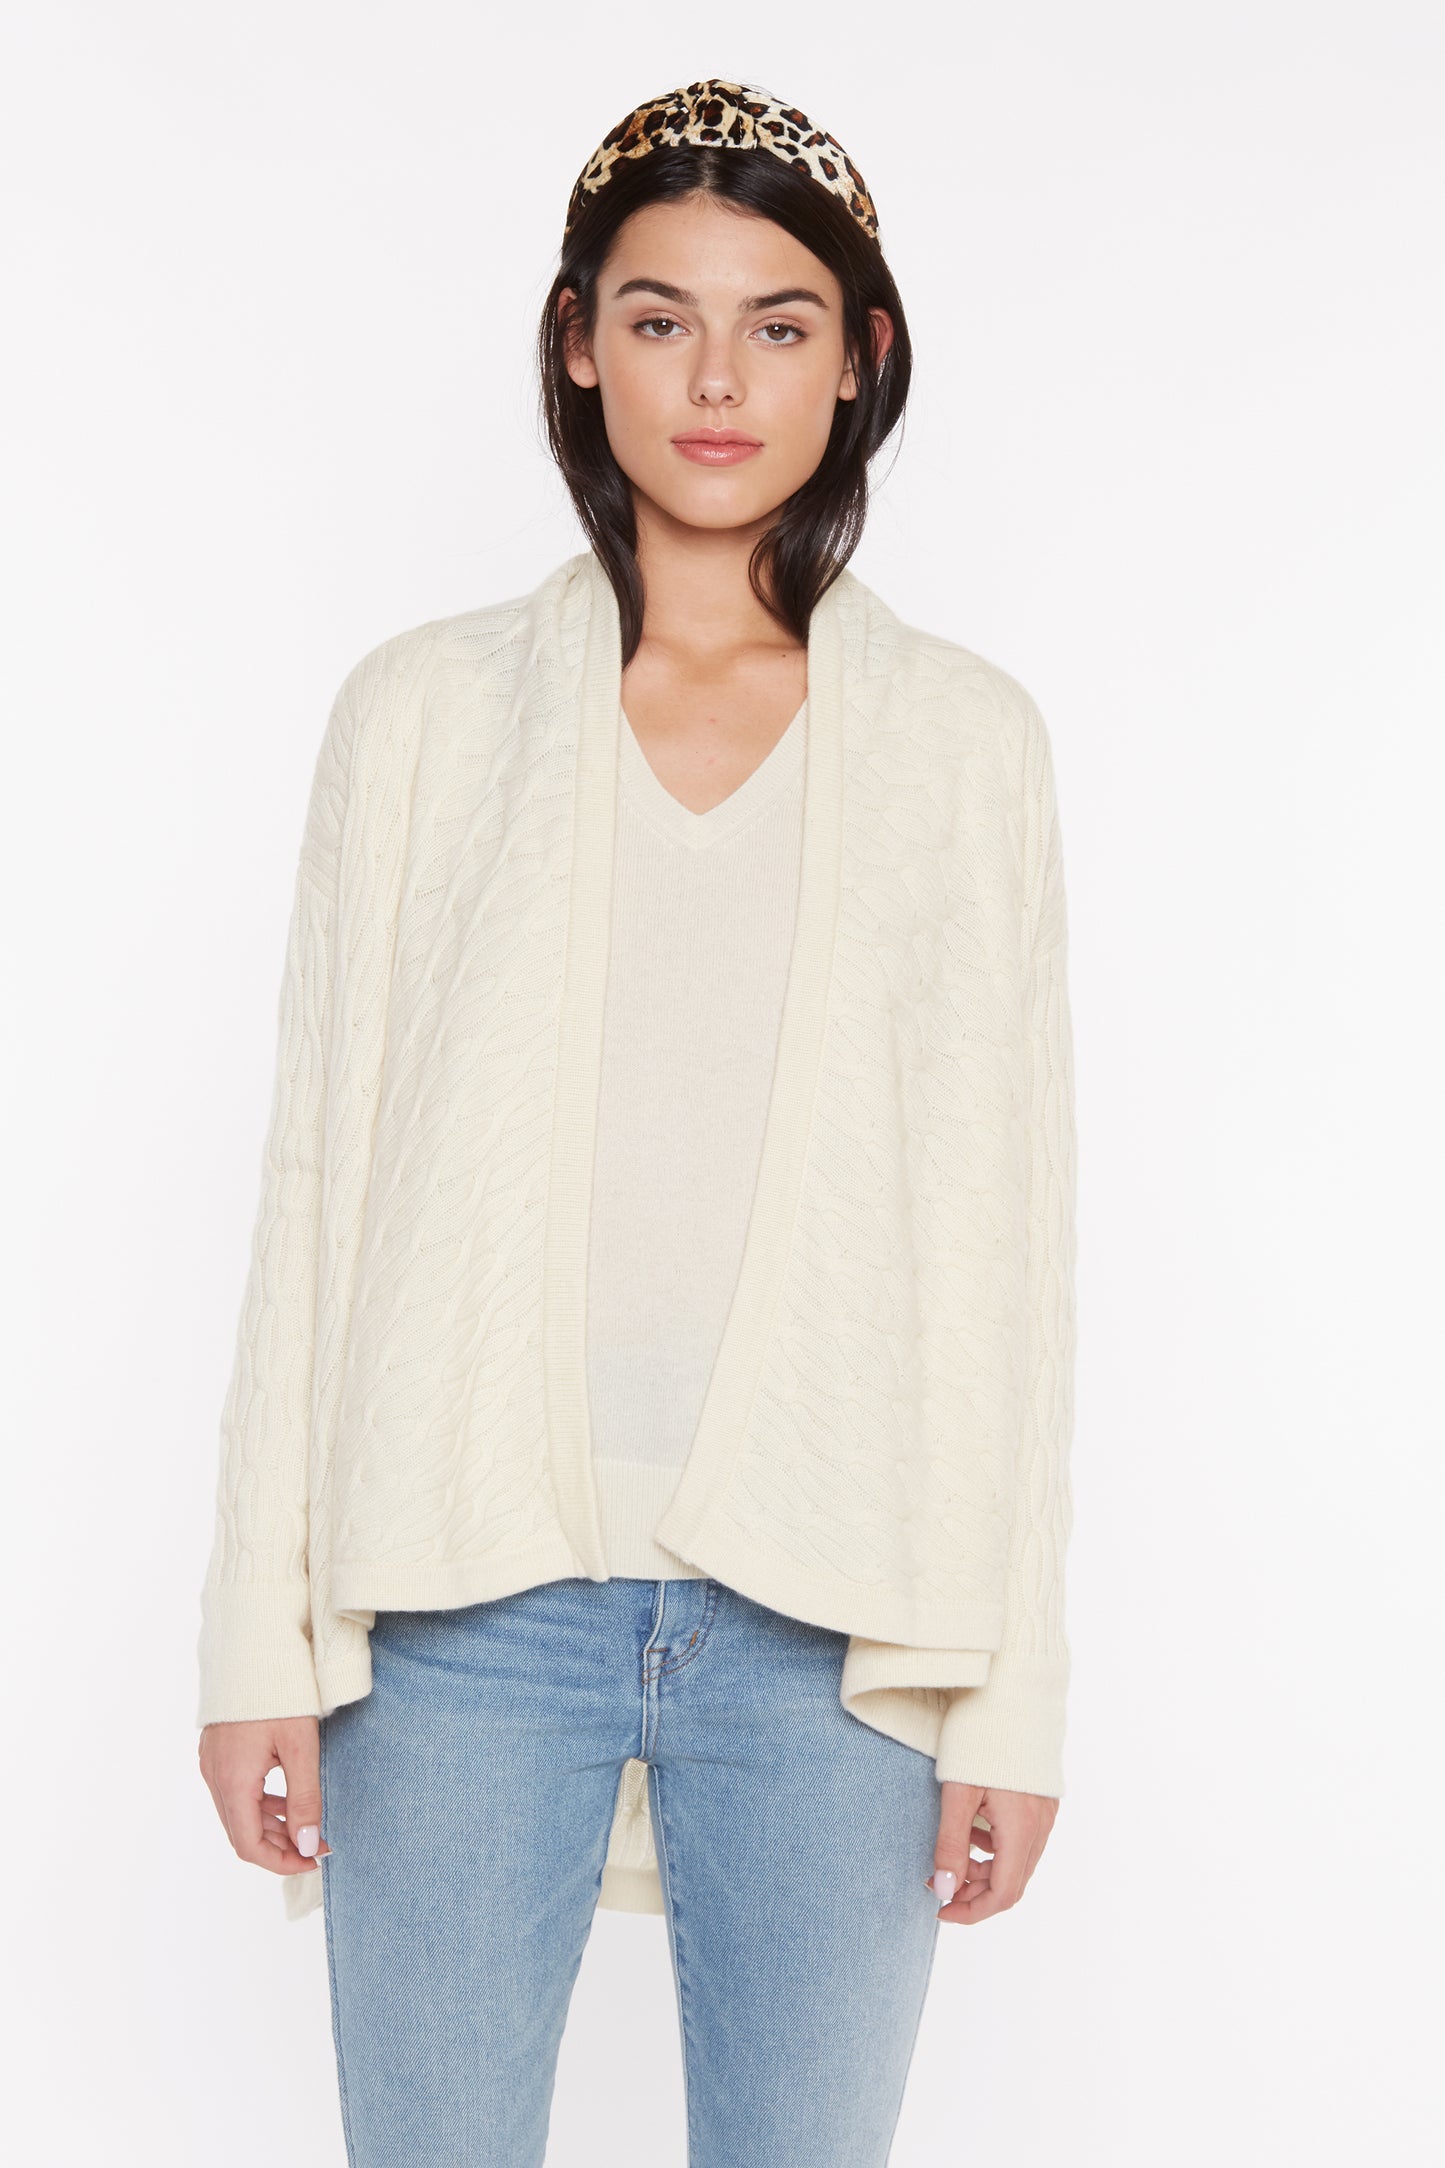 JENNIE LIU Women's 100% Pure Cashmere 4-ply Cable-Knit Drape-Front Open Cardigan Sweater